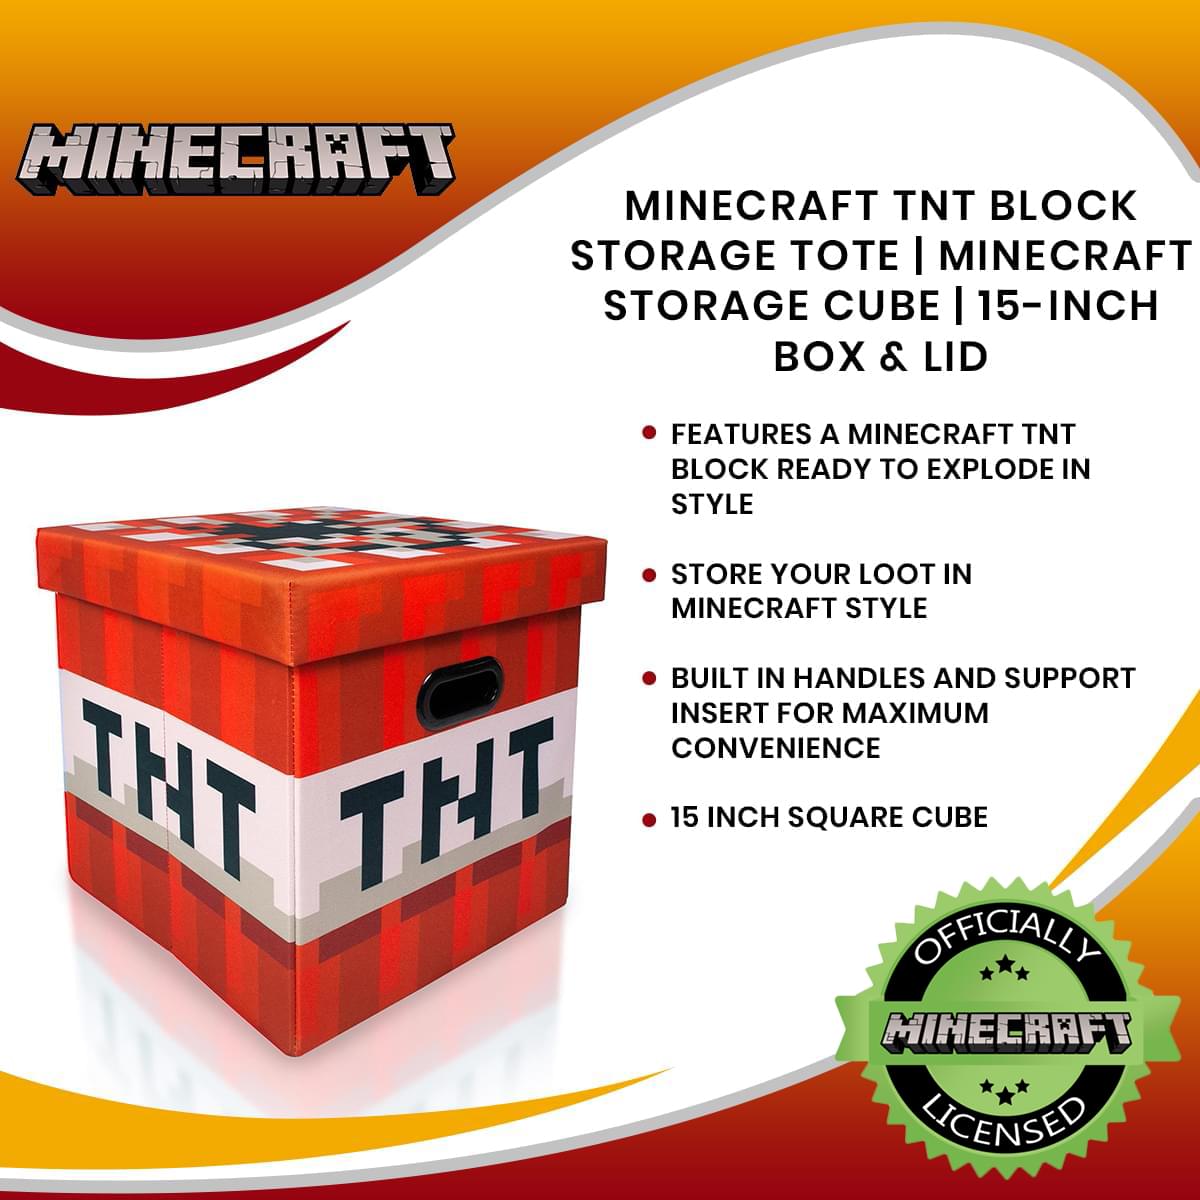 Minecraft TNT Block Area Rug, TNT Block Minecraft Rug